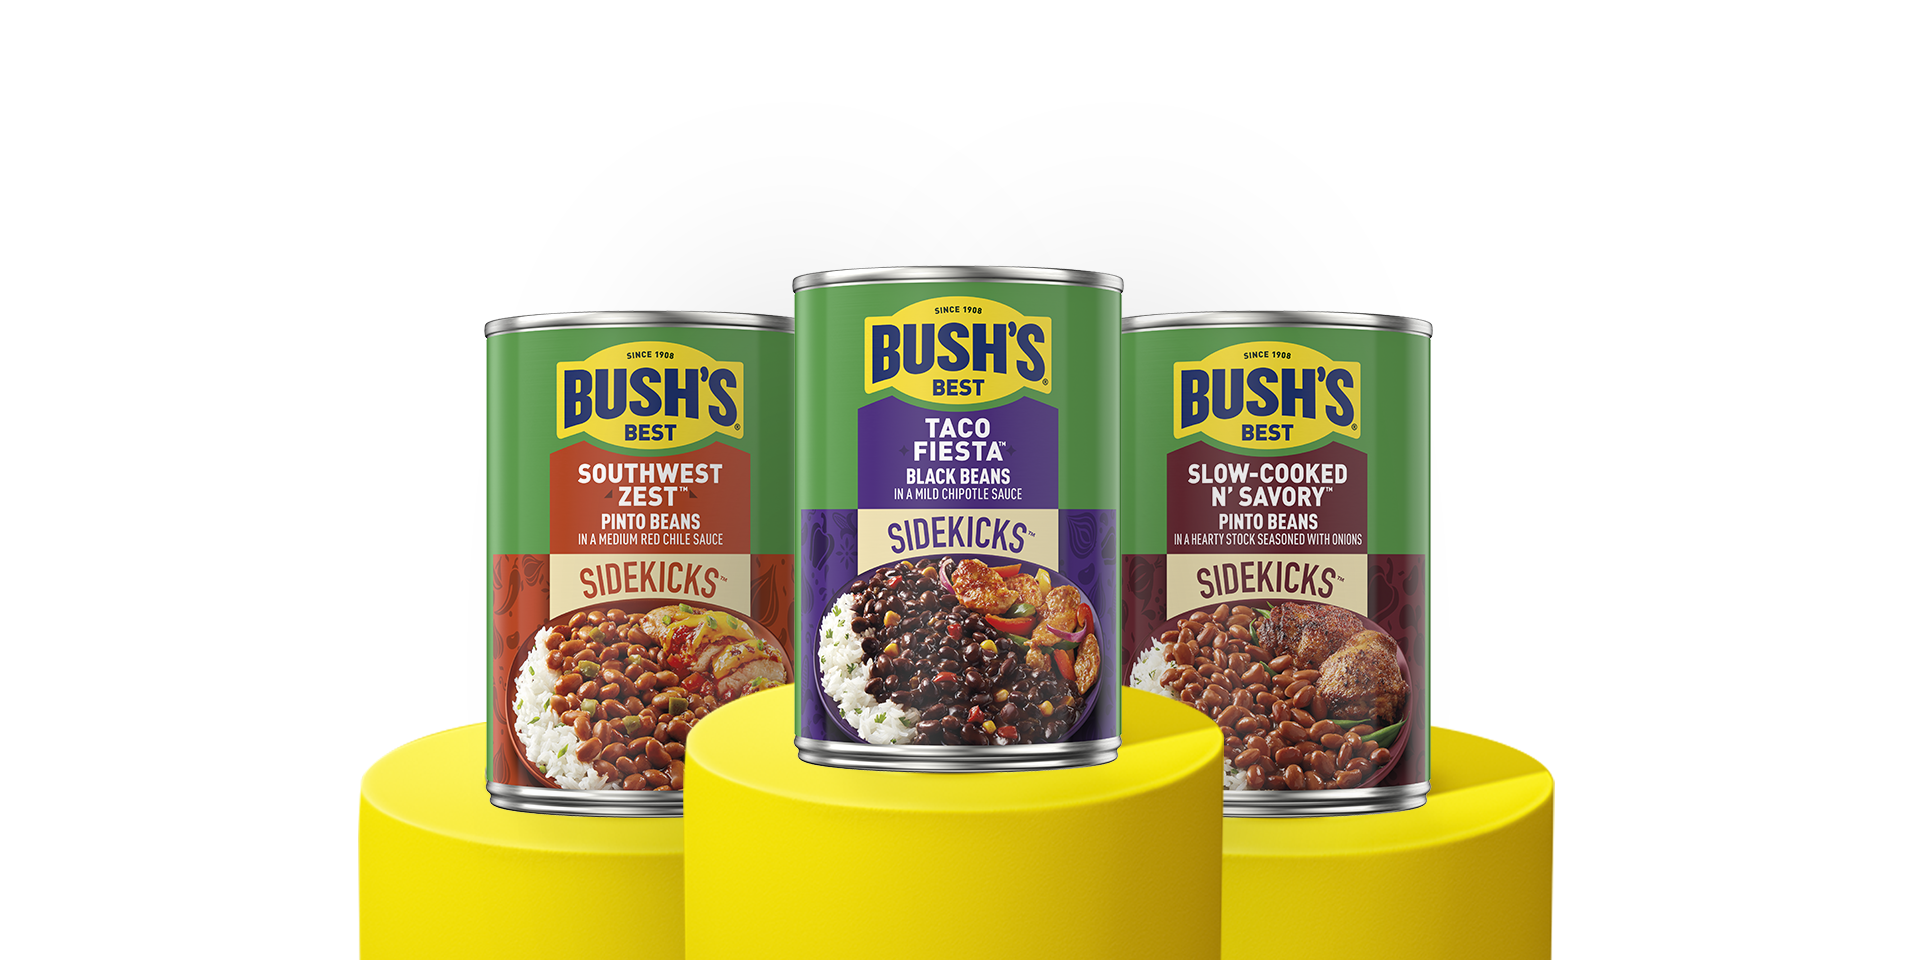 three cans of Bush's Sidekicks beans on a yellow pedestals.